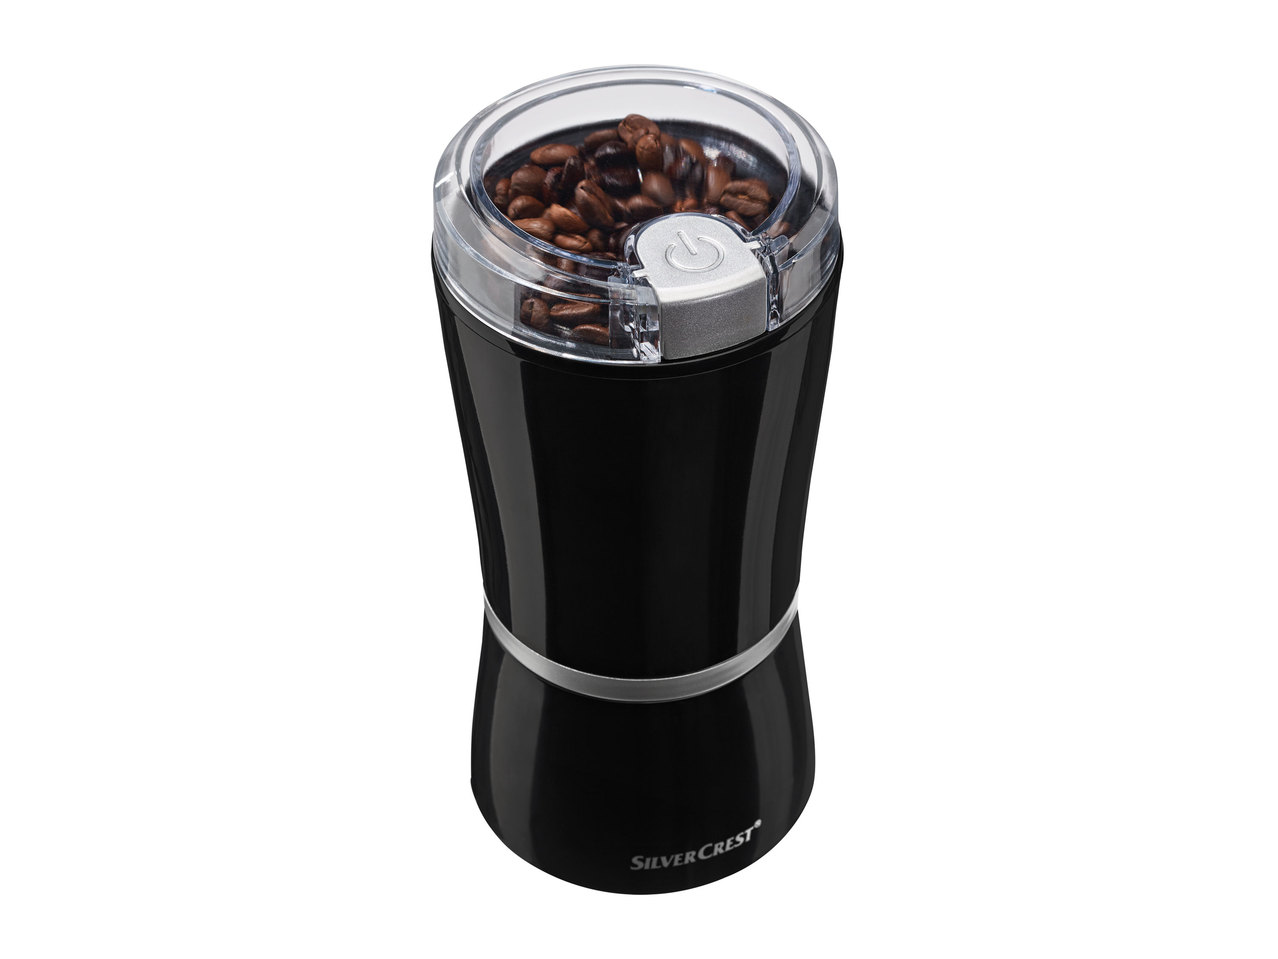 Silvercrest Electric Coffee Grinder1